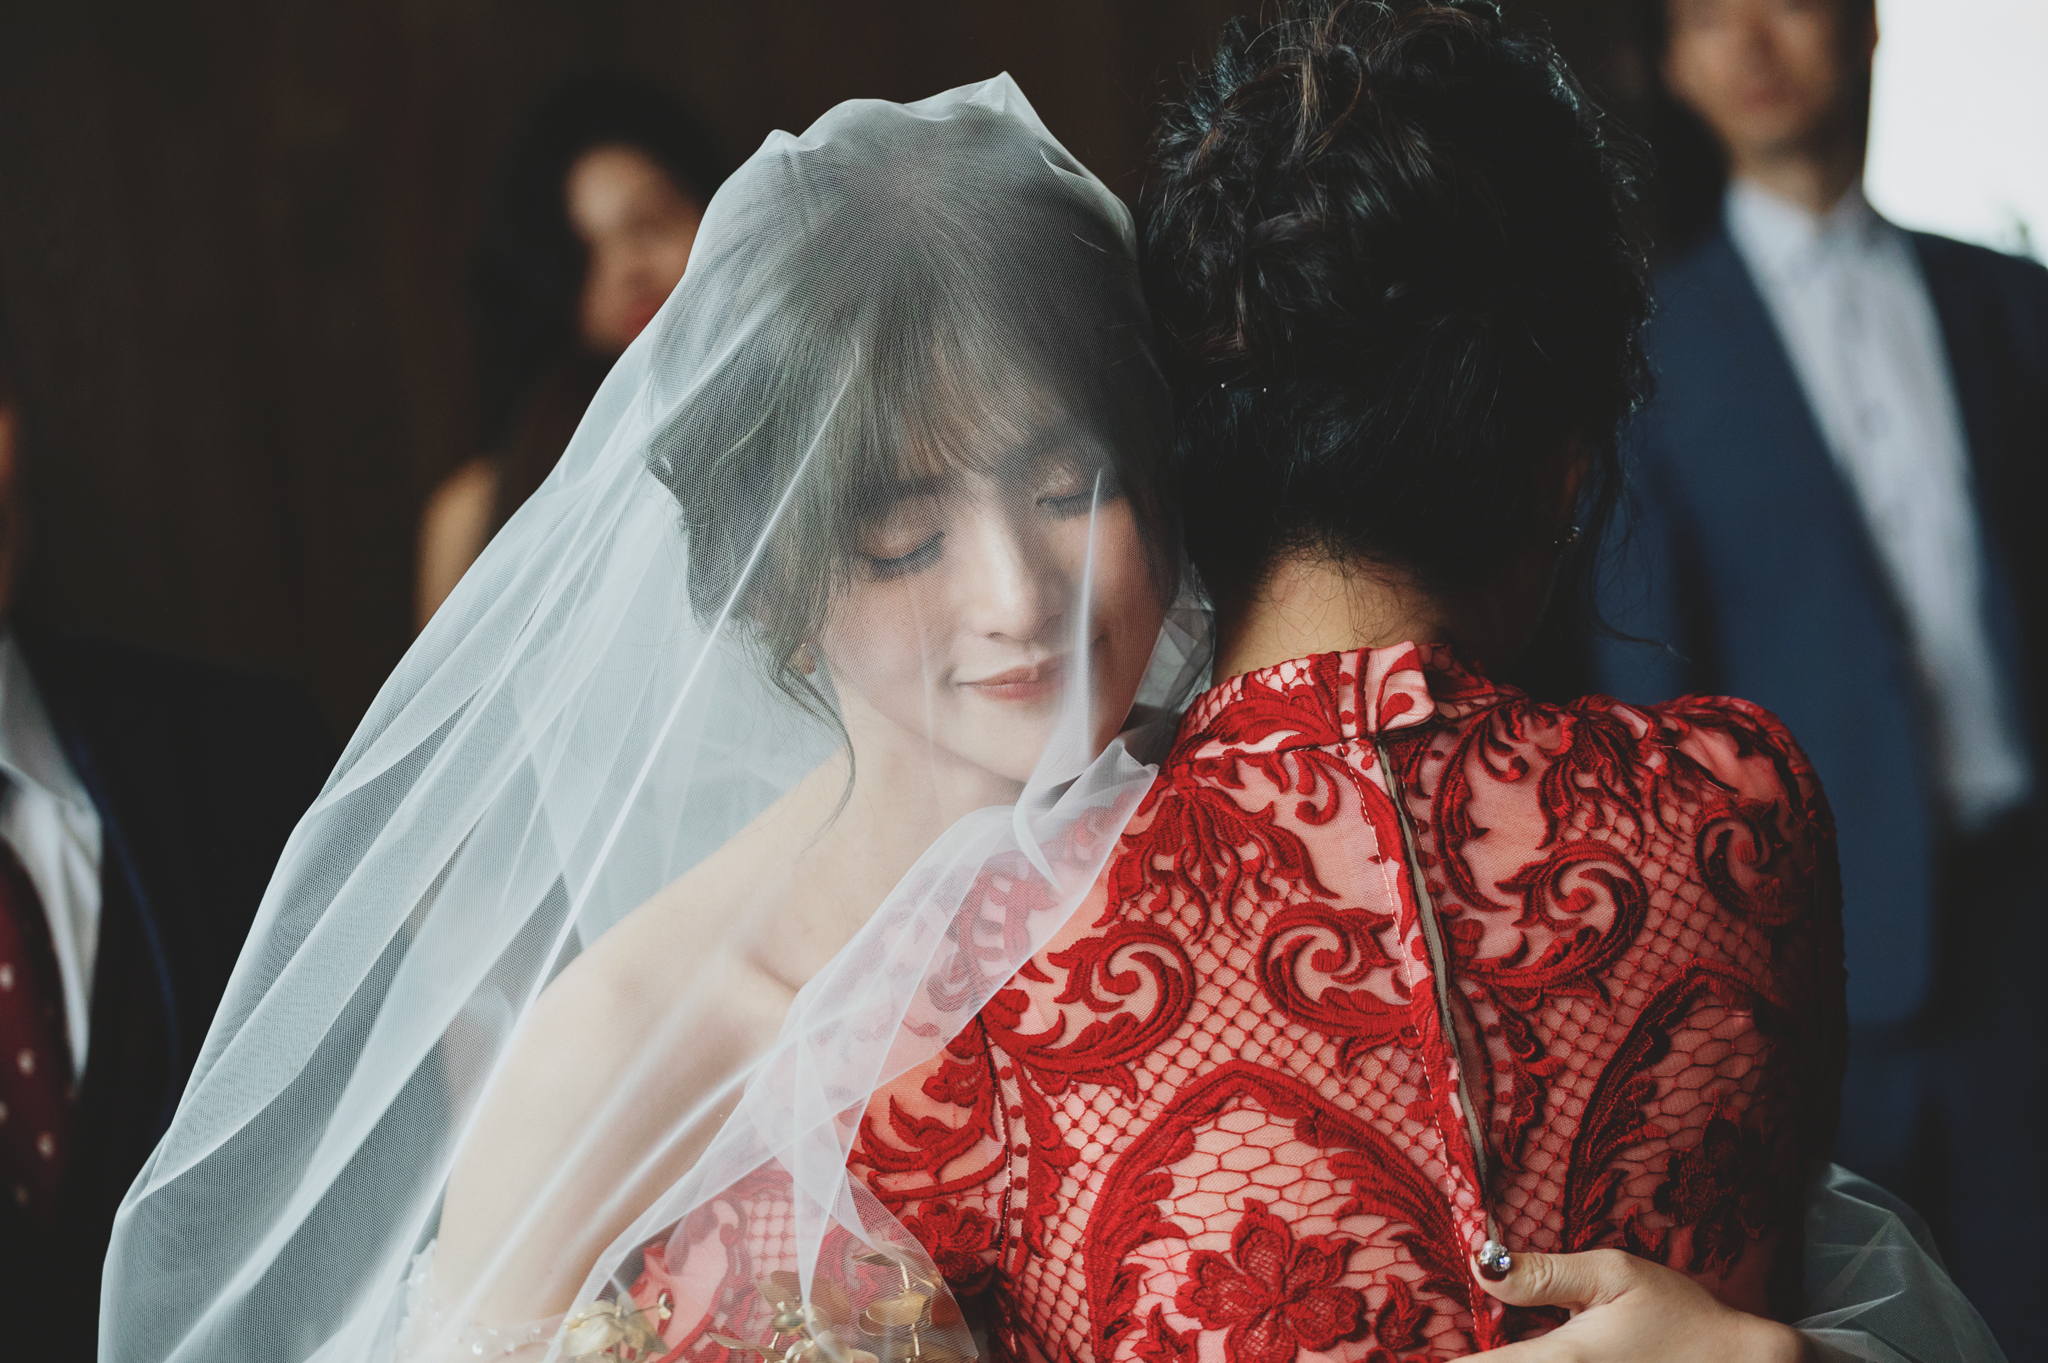 Donfer, 東法, EASTERN WEDDING, Niniko, 君品酒店, 藝術婚禮, 台北婚攝, 婚禮紀錄